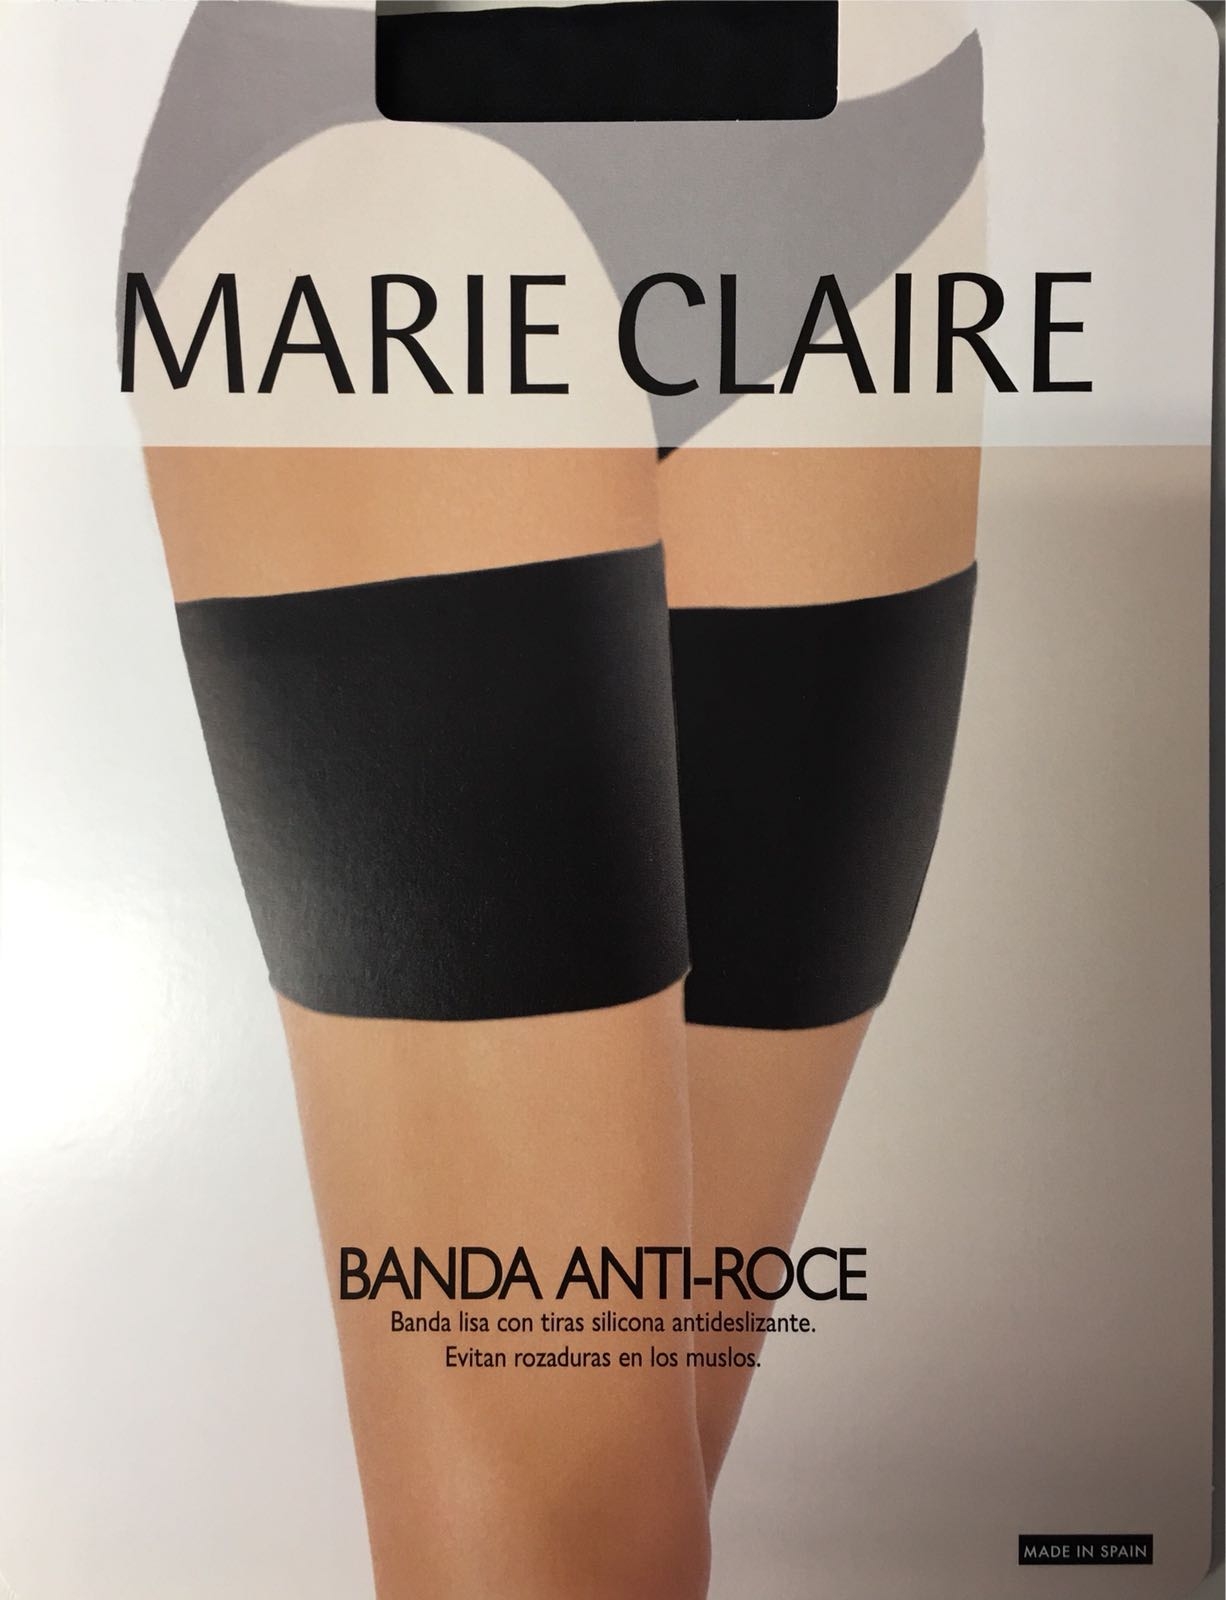 MARIE CLAIRE BANDA ANTI-ROCE NATURAL T.M